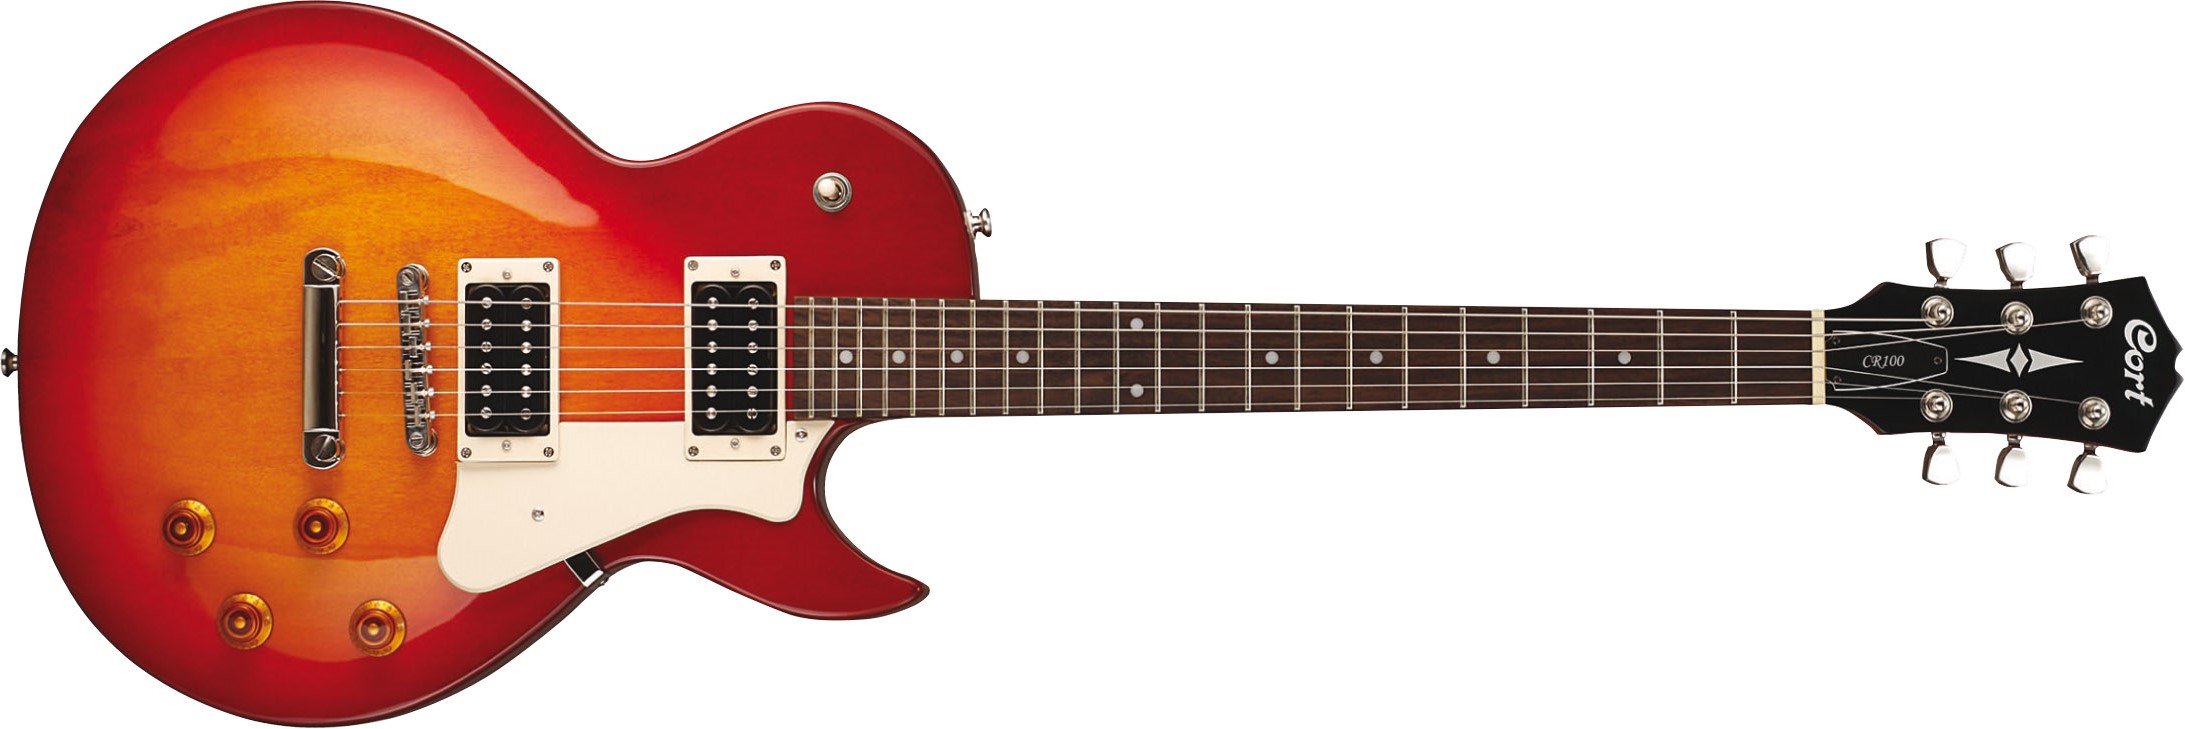 Cort Cr100 Crs Classic Rock Hh Ht - Cherry Red Sunburst - Single cut electric guitar - Variation 1